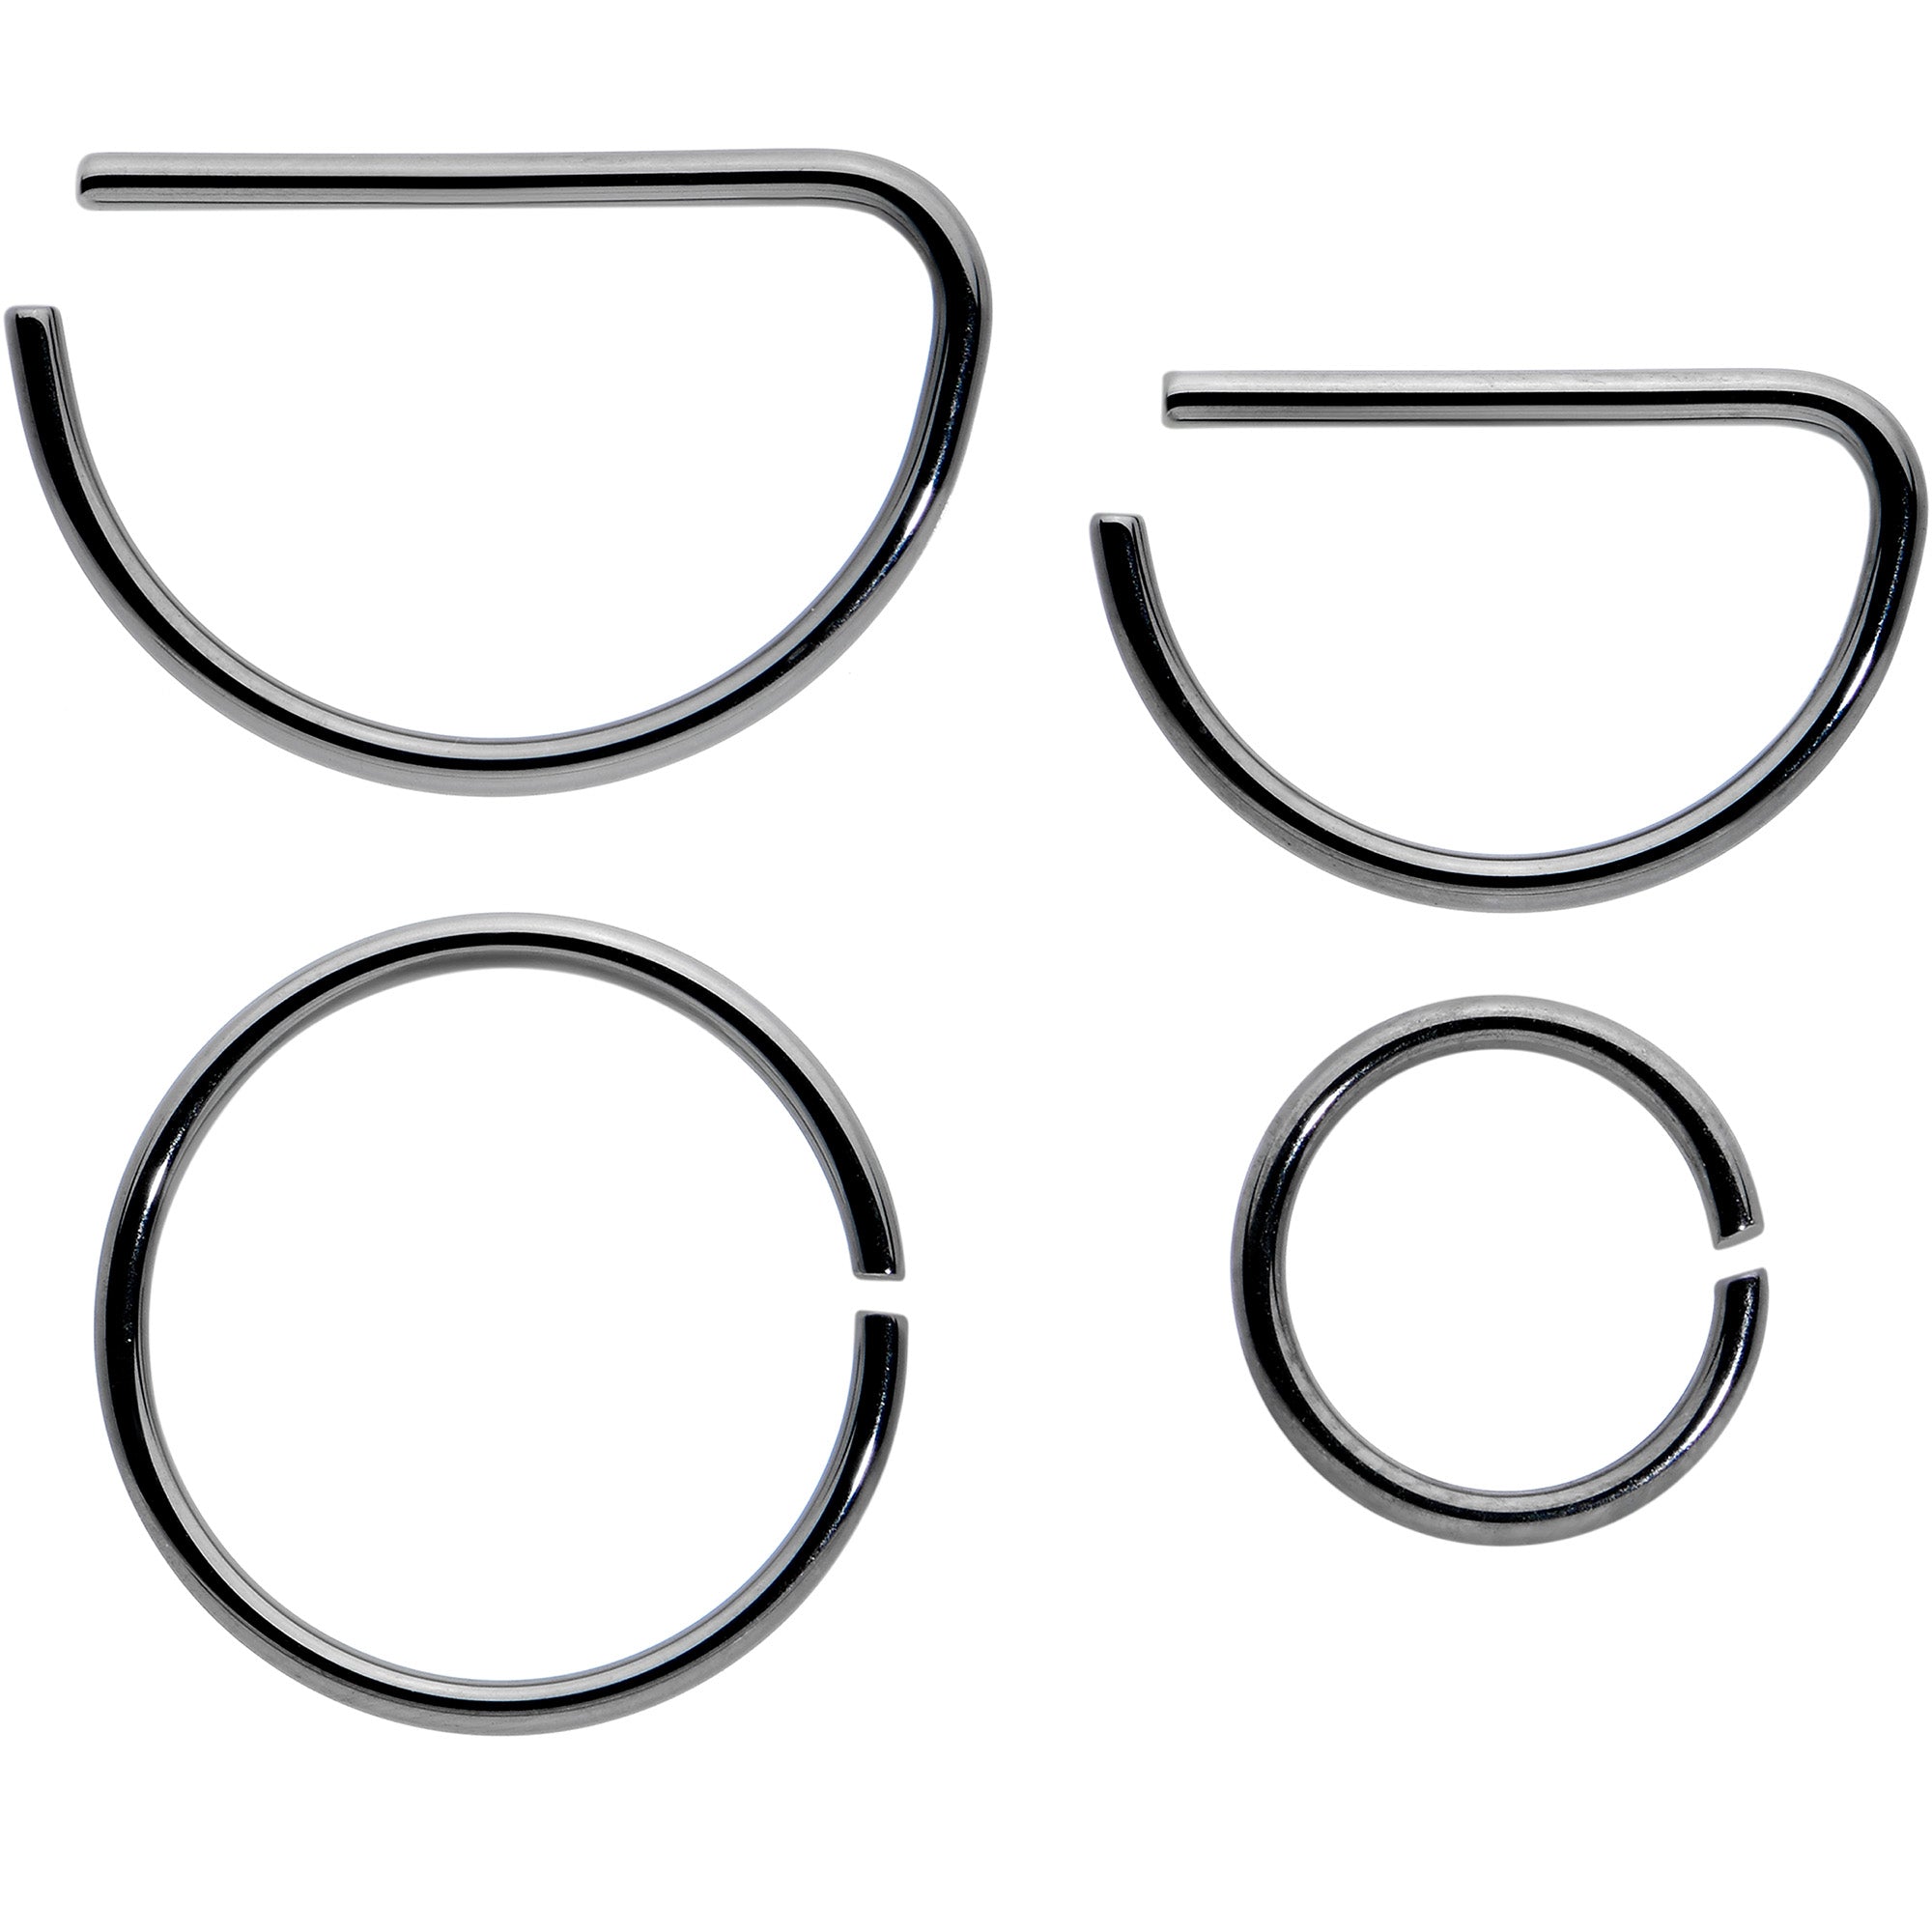 20 Gauge 12 Pack ASTM F-136 Implant Grade Titanium Nose Hoop D Shaped Septum Ring and Cartilage Ear Hoop Earring Set